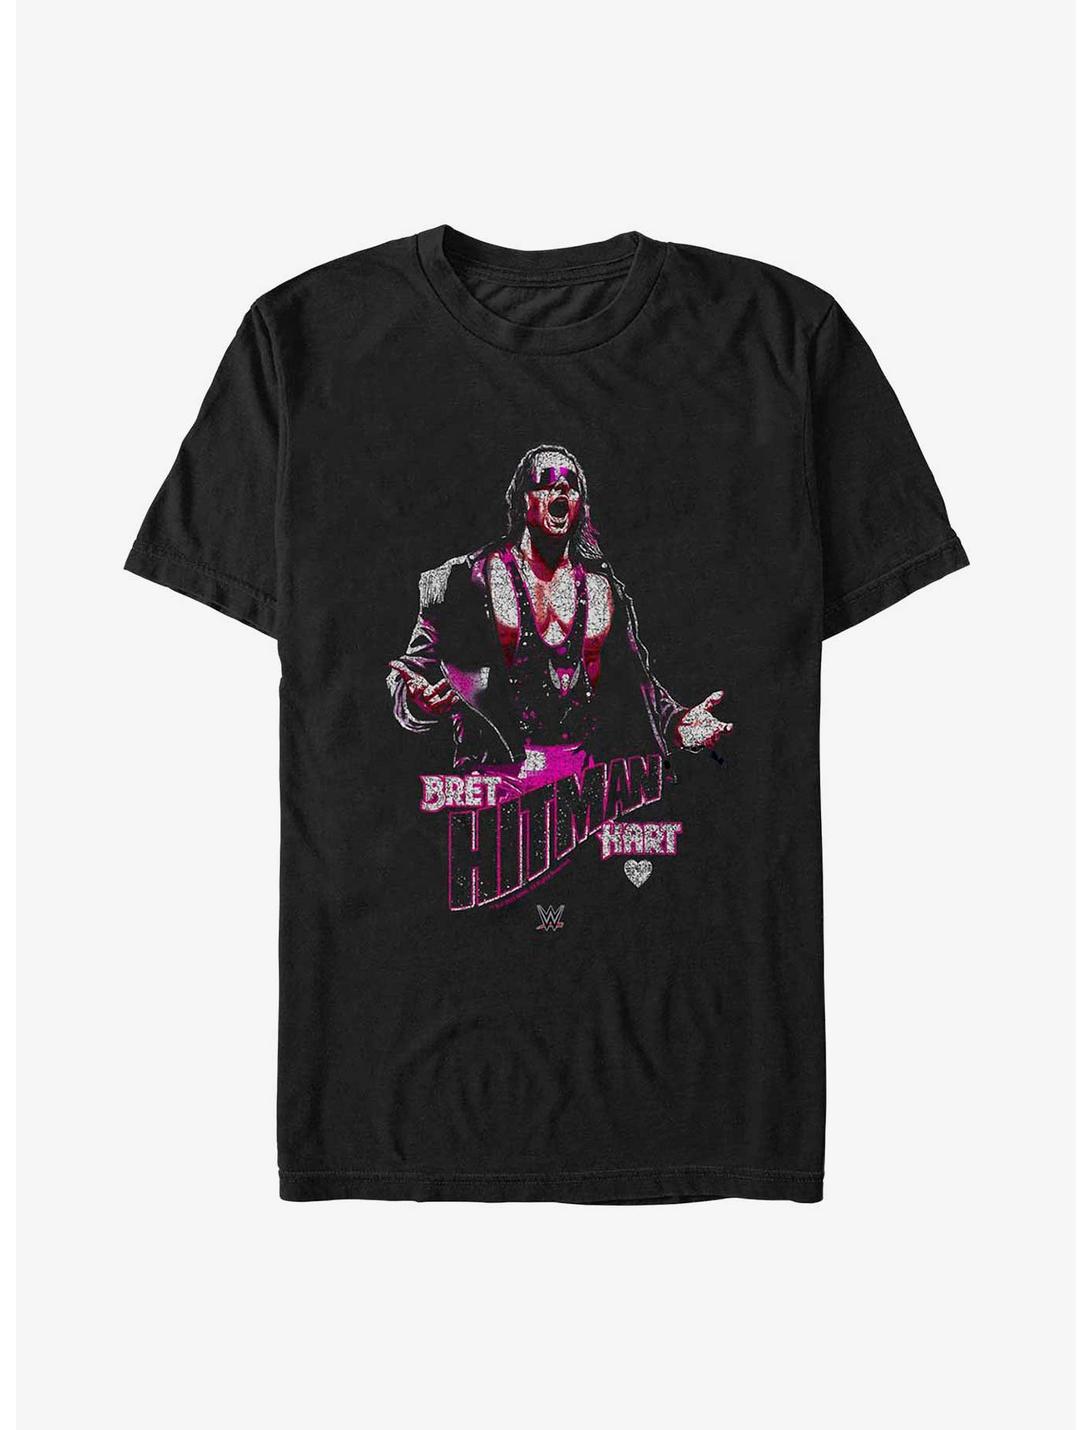 WWE Bret "Hitman" Hart Poster T-Shirt, BLACK, hi-res